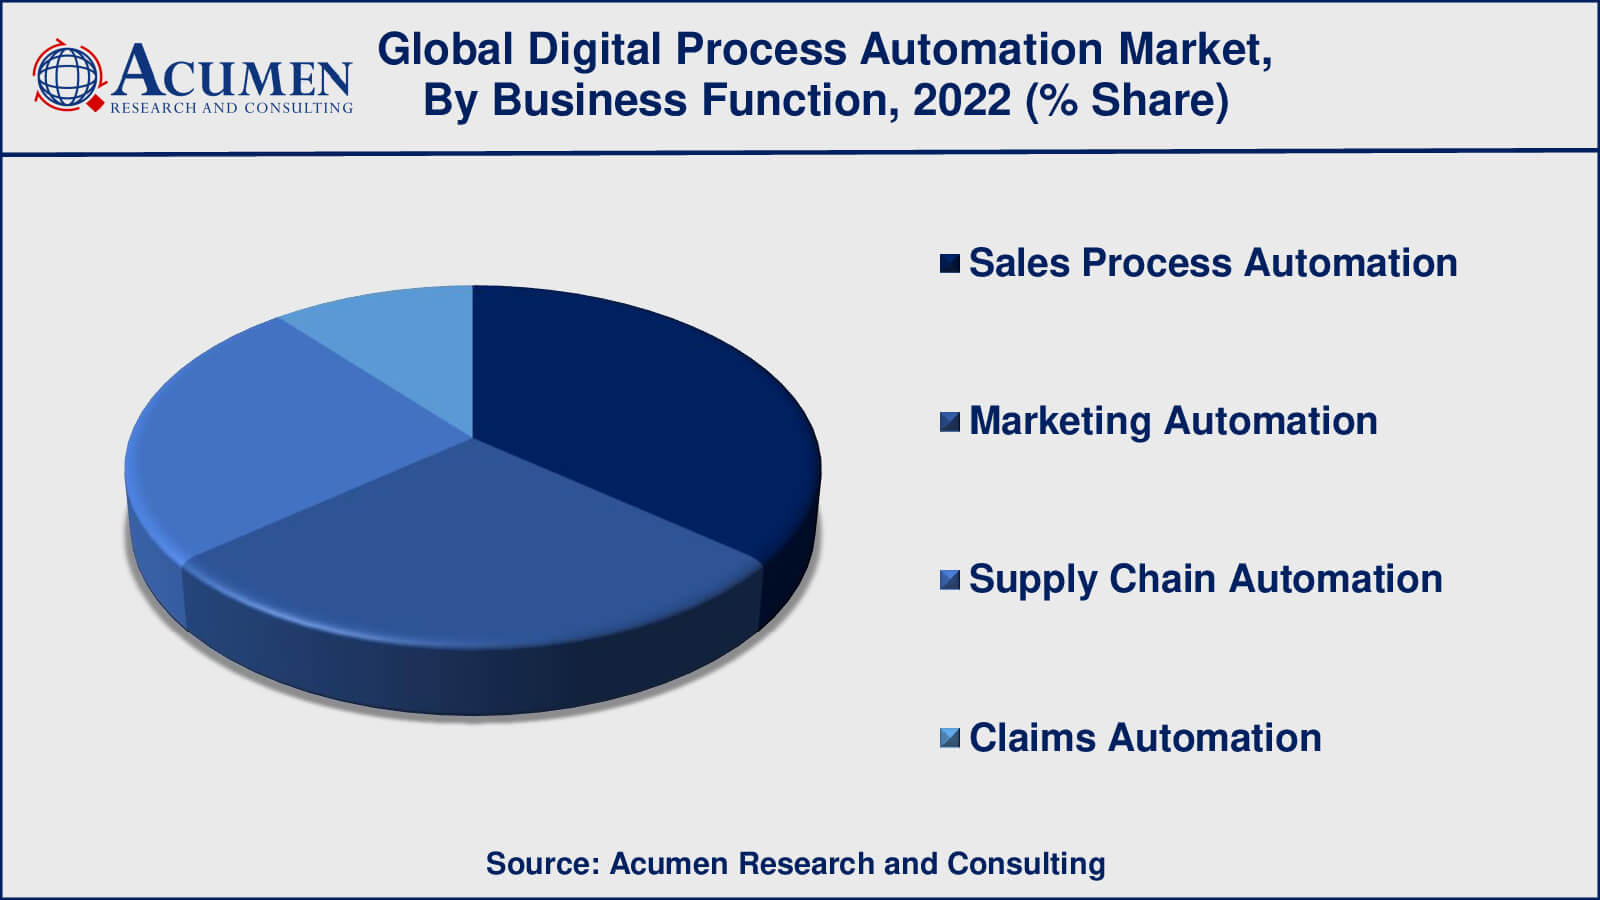 Digital Process Automation Market Drivers